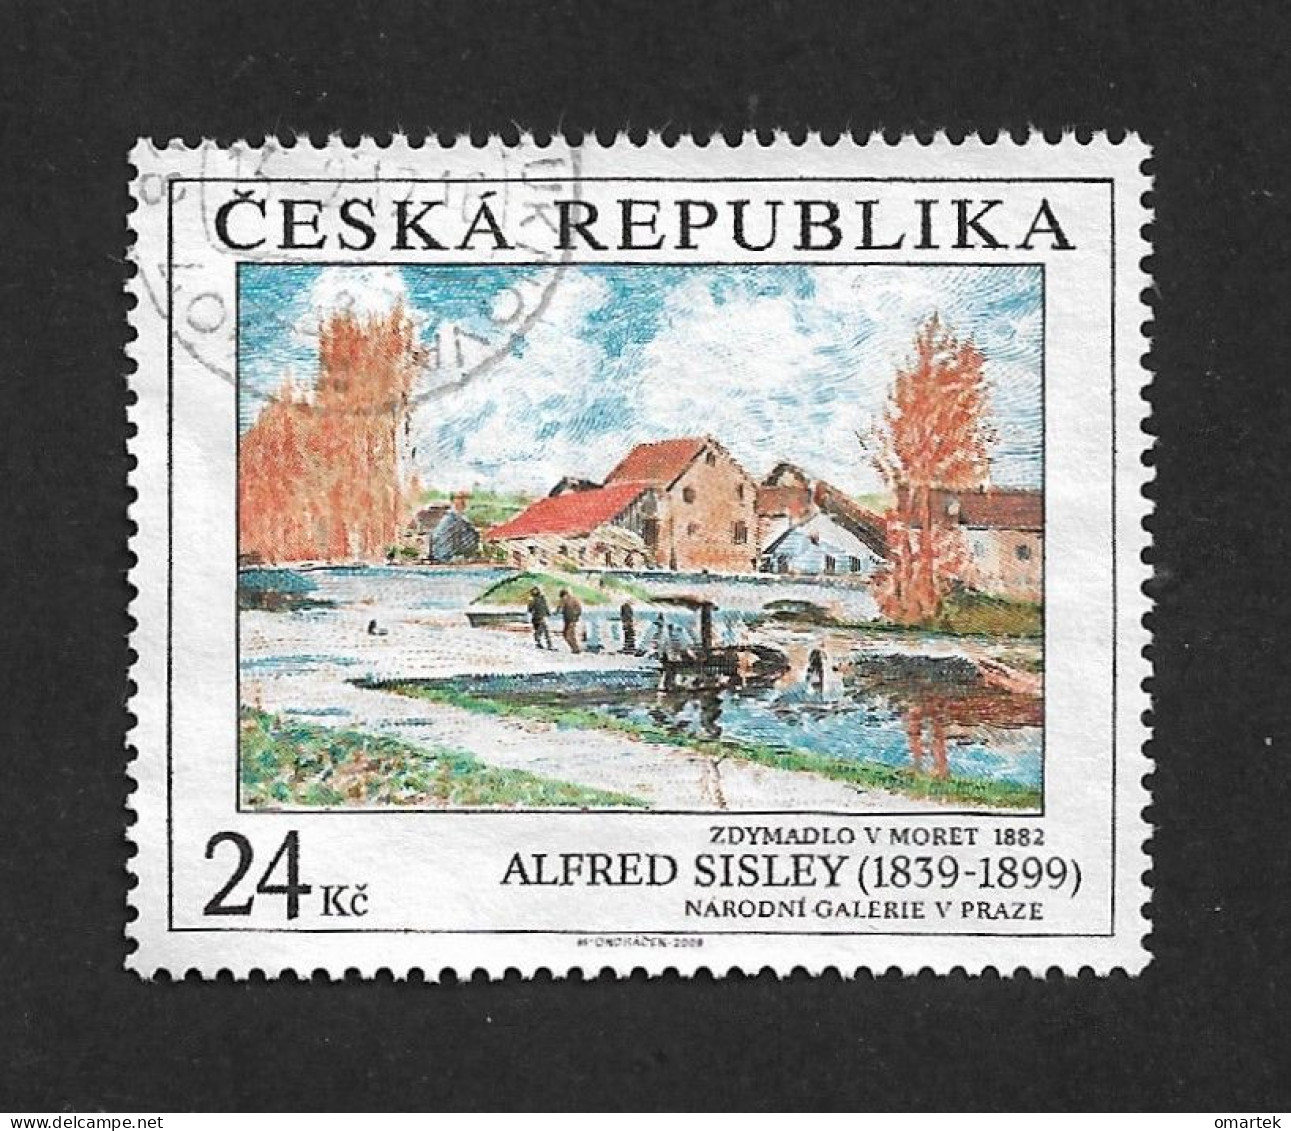 Czech Republic 2009 ⊙ Mi 614 Sc 3435 Alfred Sisley. Art Painting. Tschechische Republik. C3 - Oblitérés